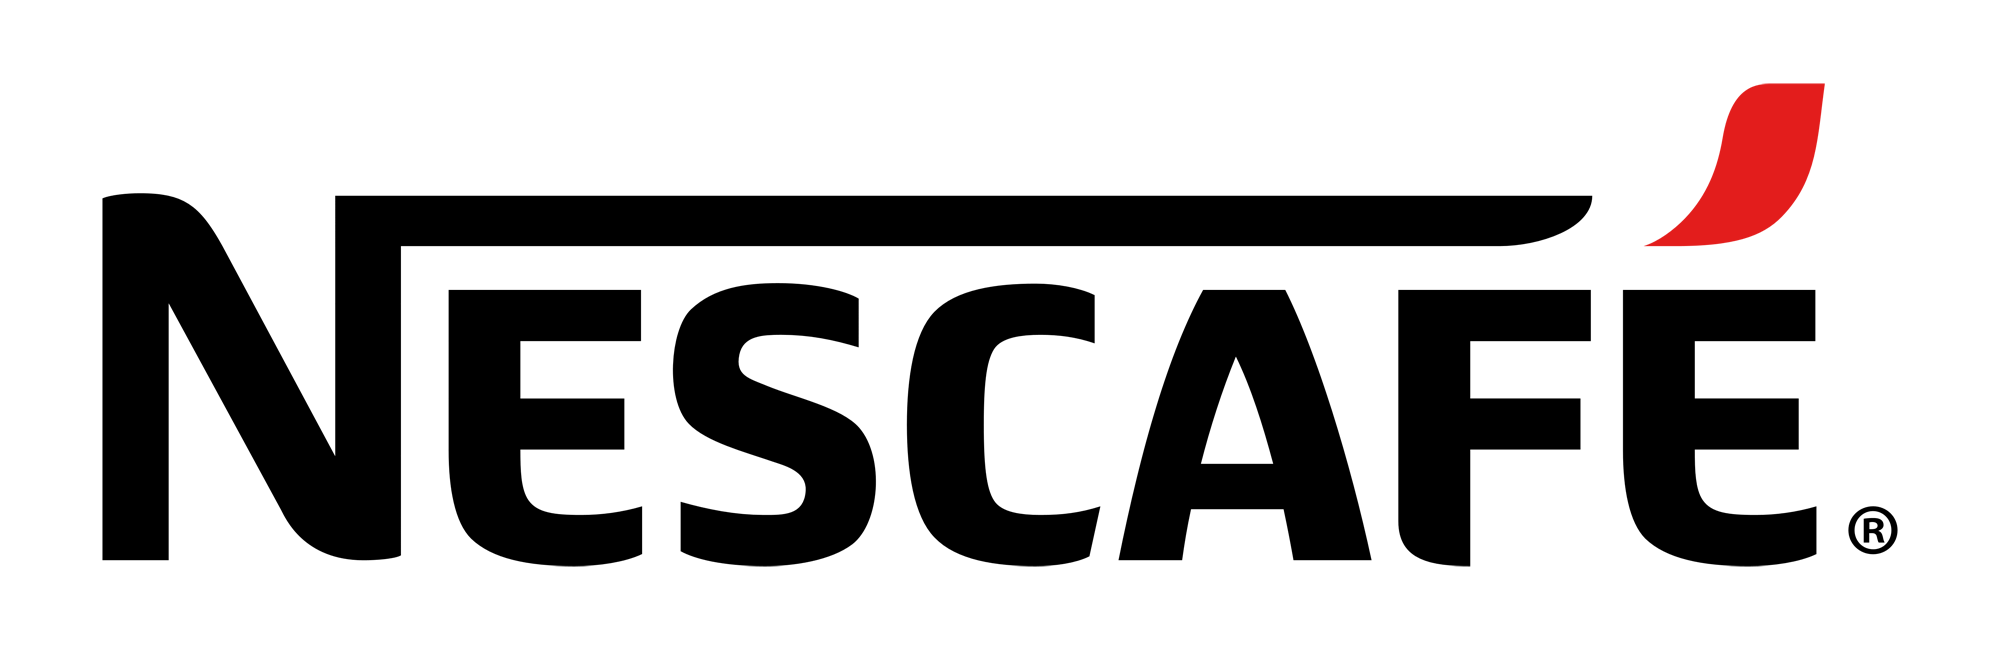 Nescafe-Logo.png